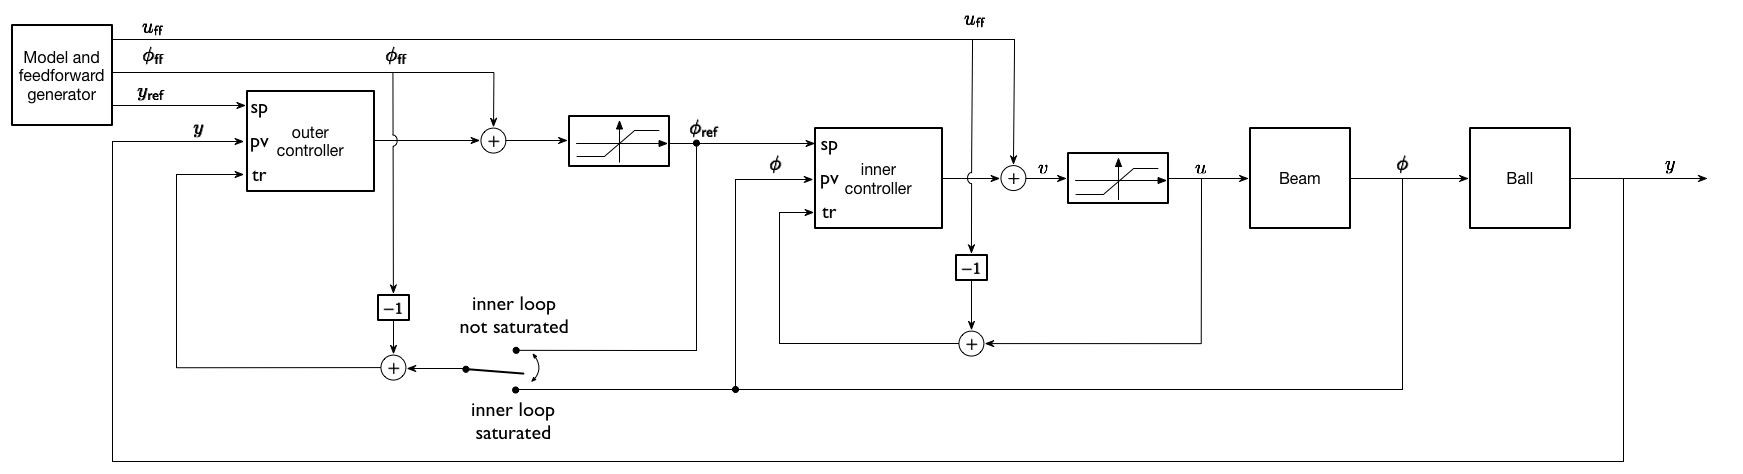 Feedforward Block Diagram